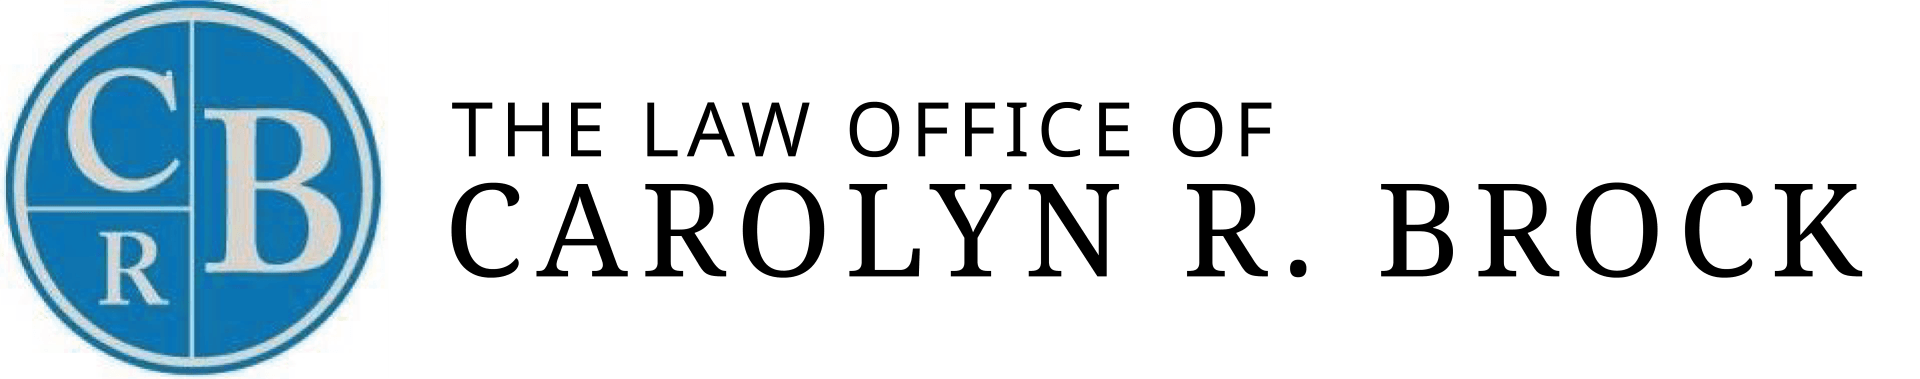 The Law Office of Carolyn R. Brock Logo